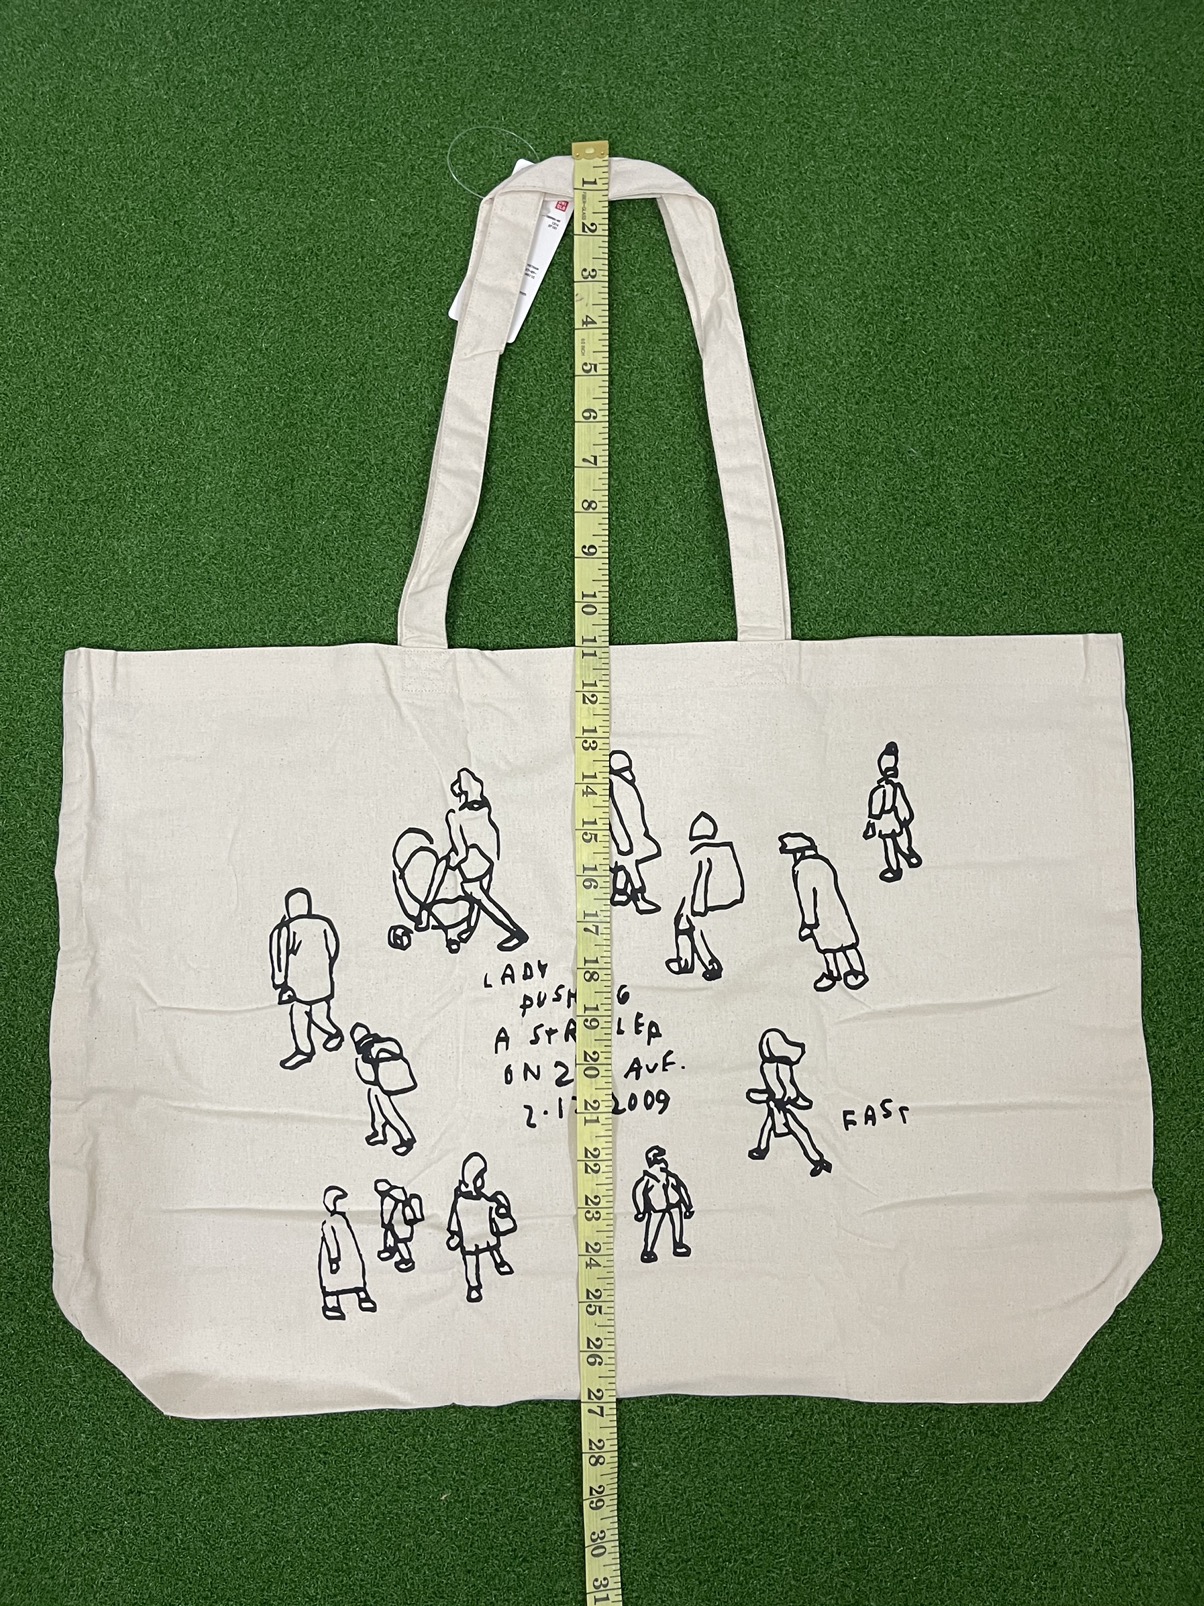 Jun Takahashi - New Jason Polan Tote Bag Limited Edition / Uniqlo / Eva - 7